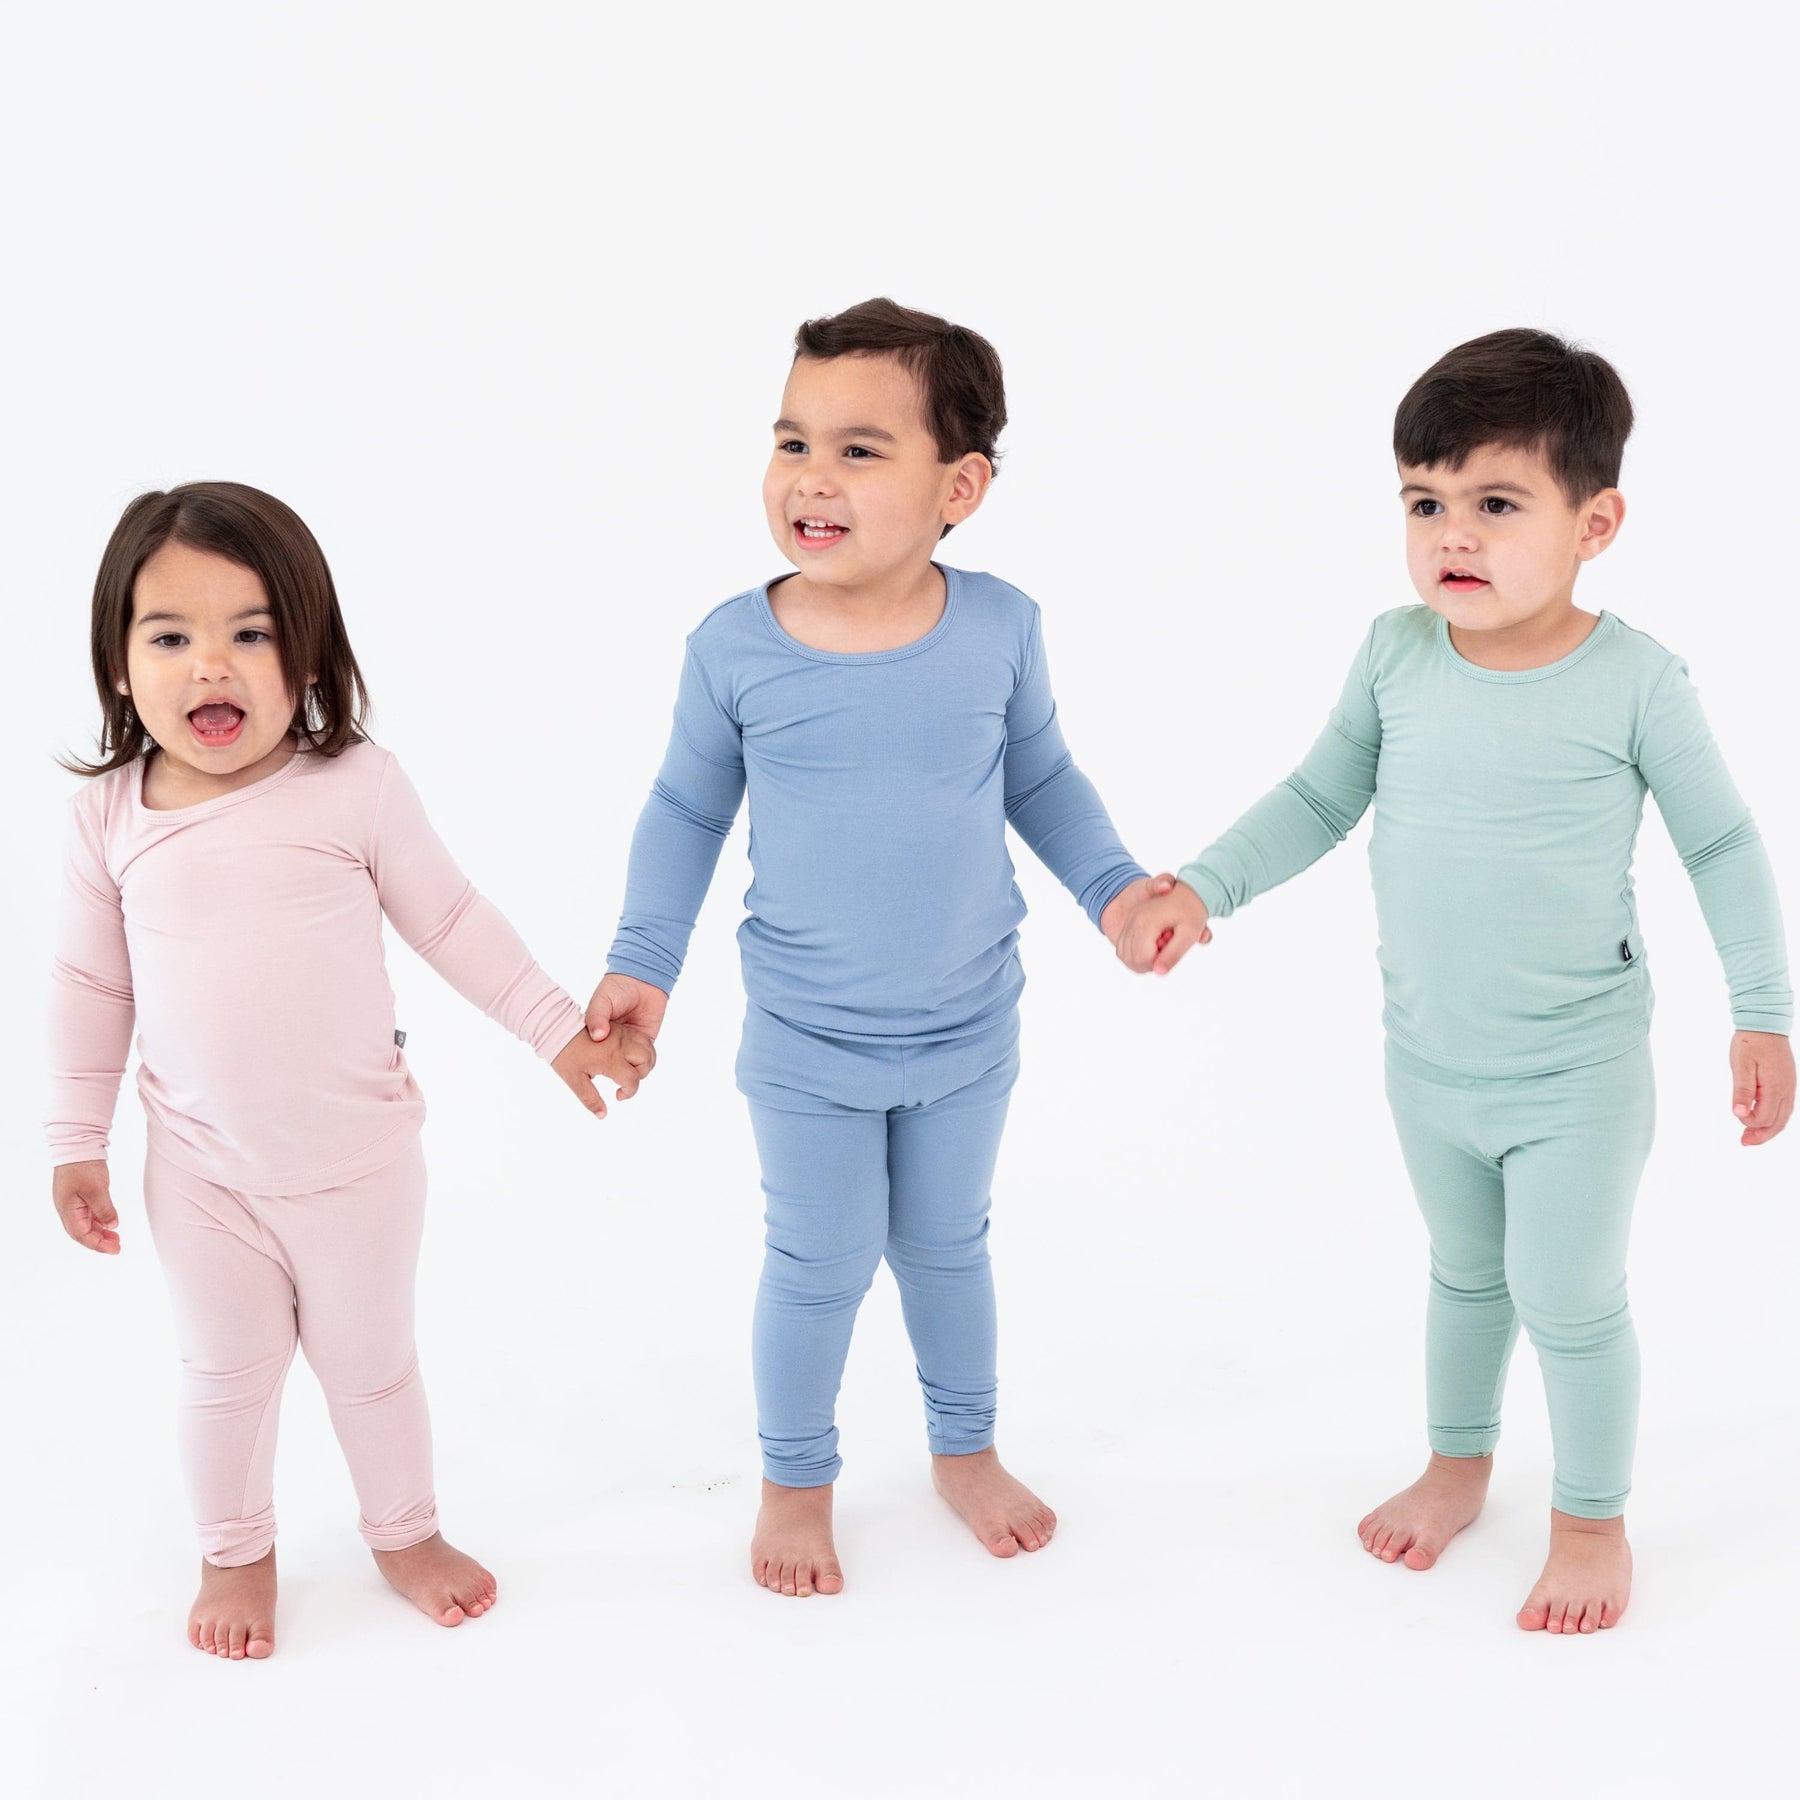 Toddlers wearing Kyte Baby long sleeve bamboo pajamas